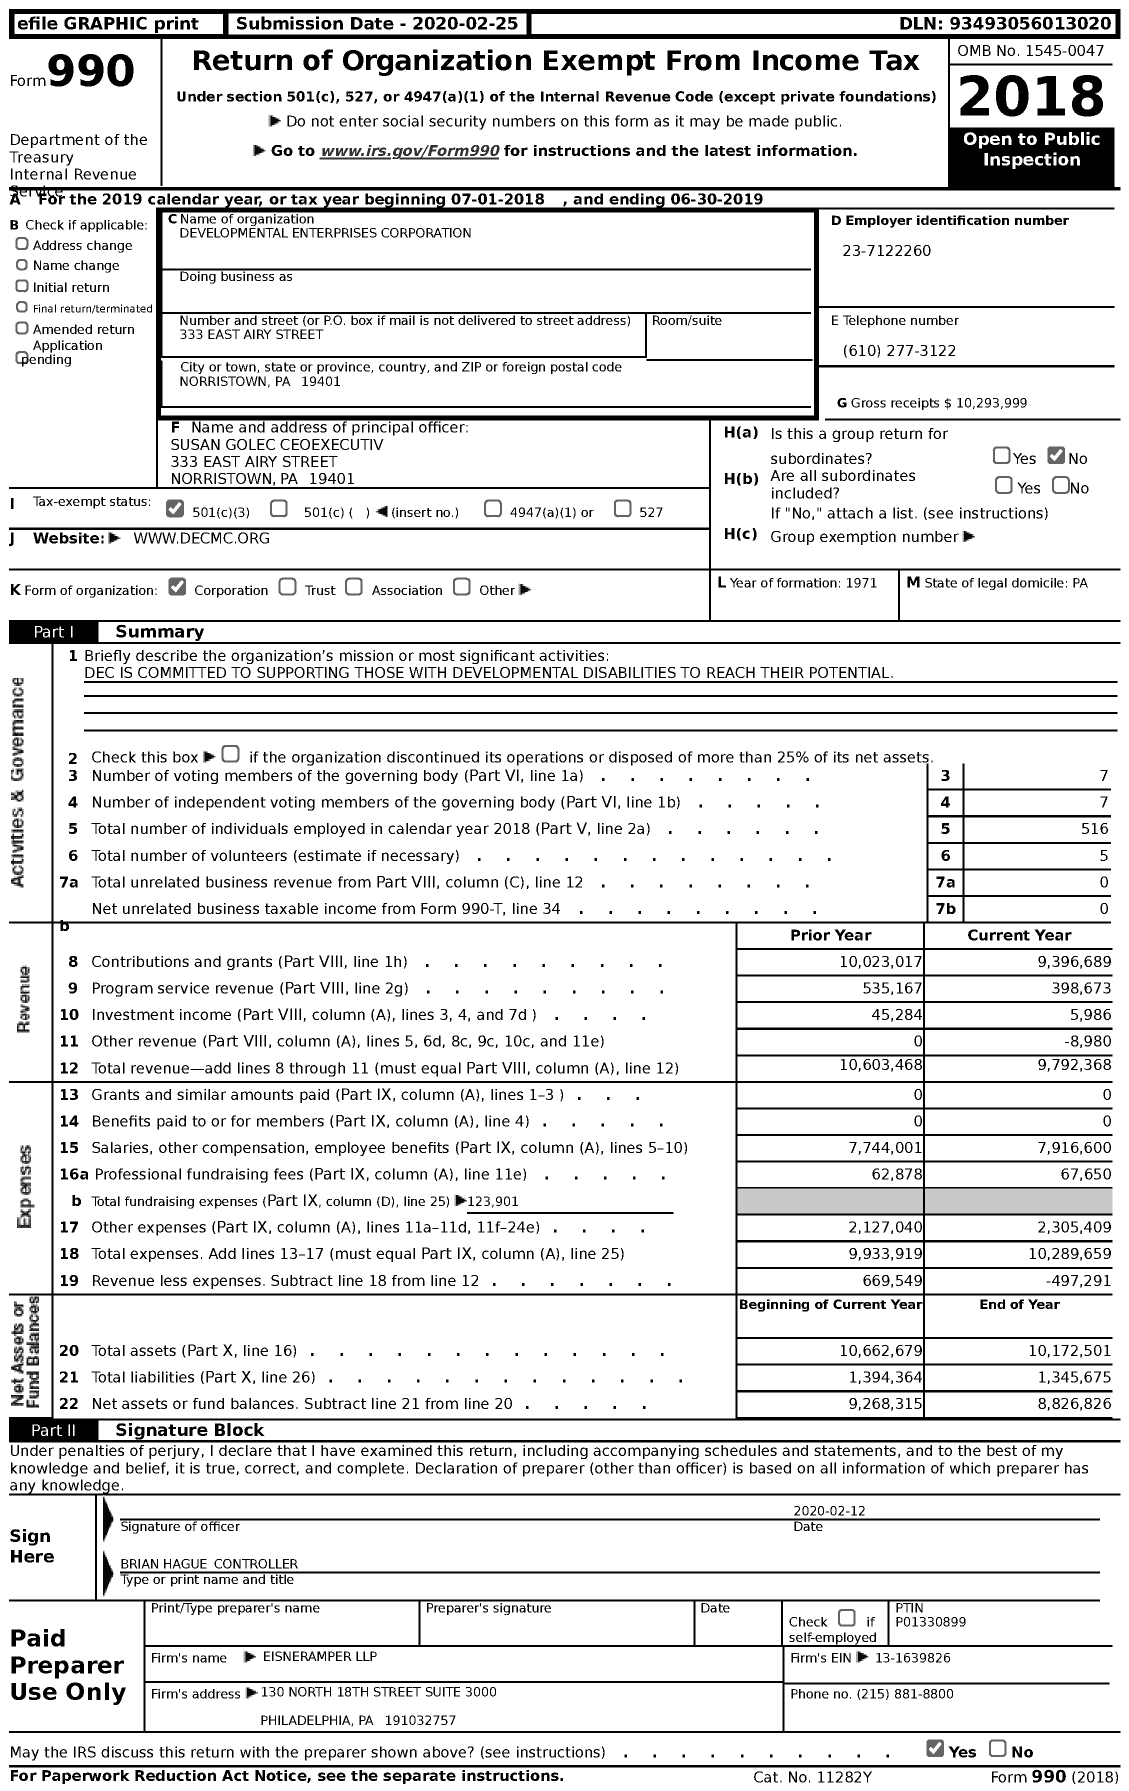 Image of first page of 2018 Form 990 for DEVELOPMENTAL Enterprises Corporation (DEC)